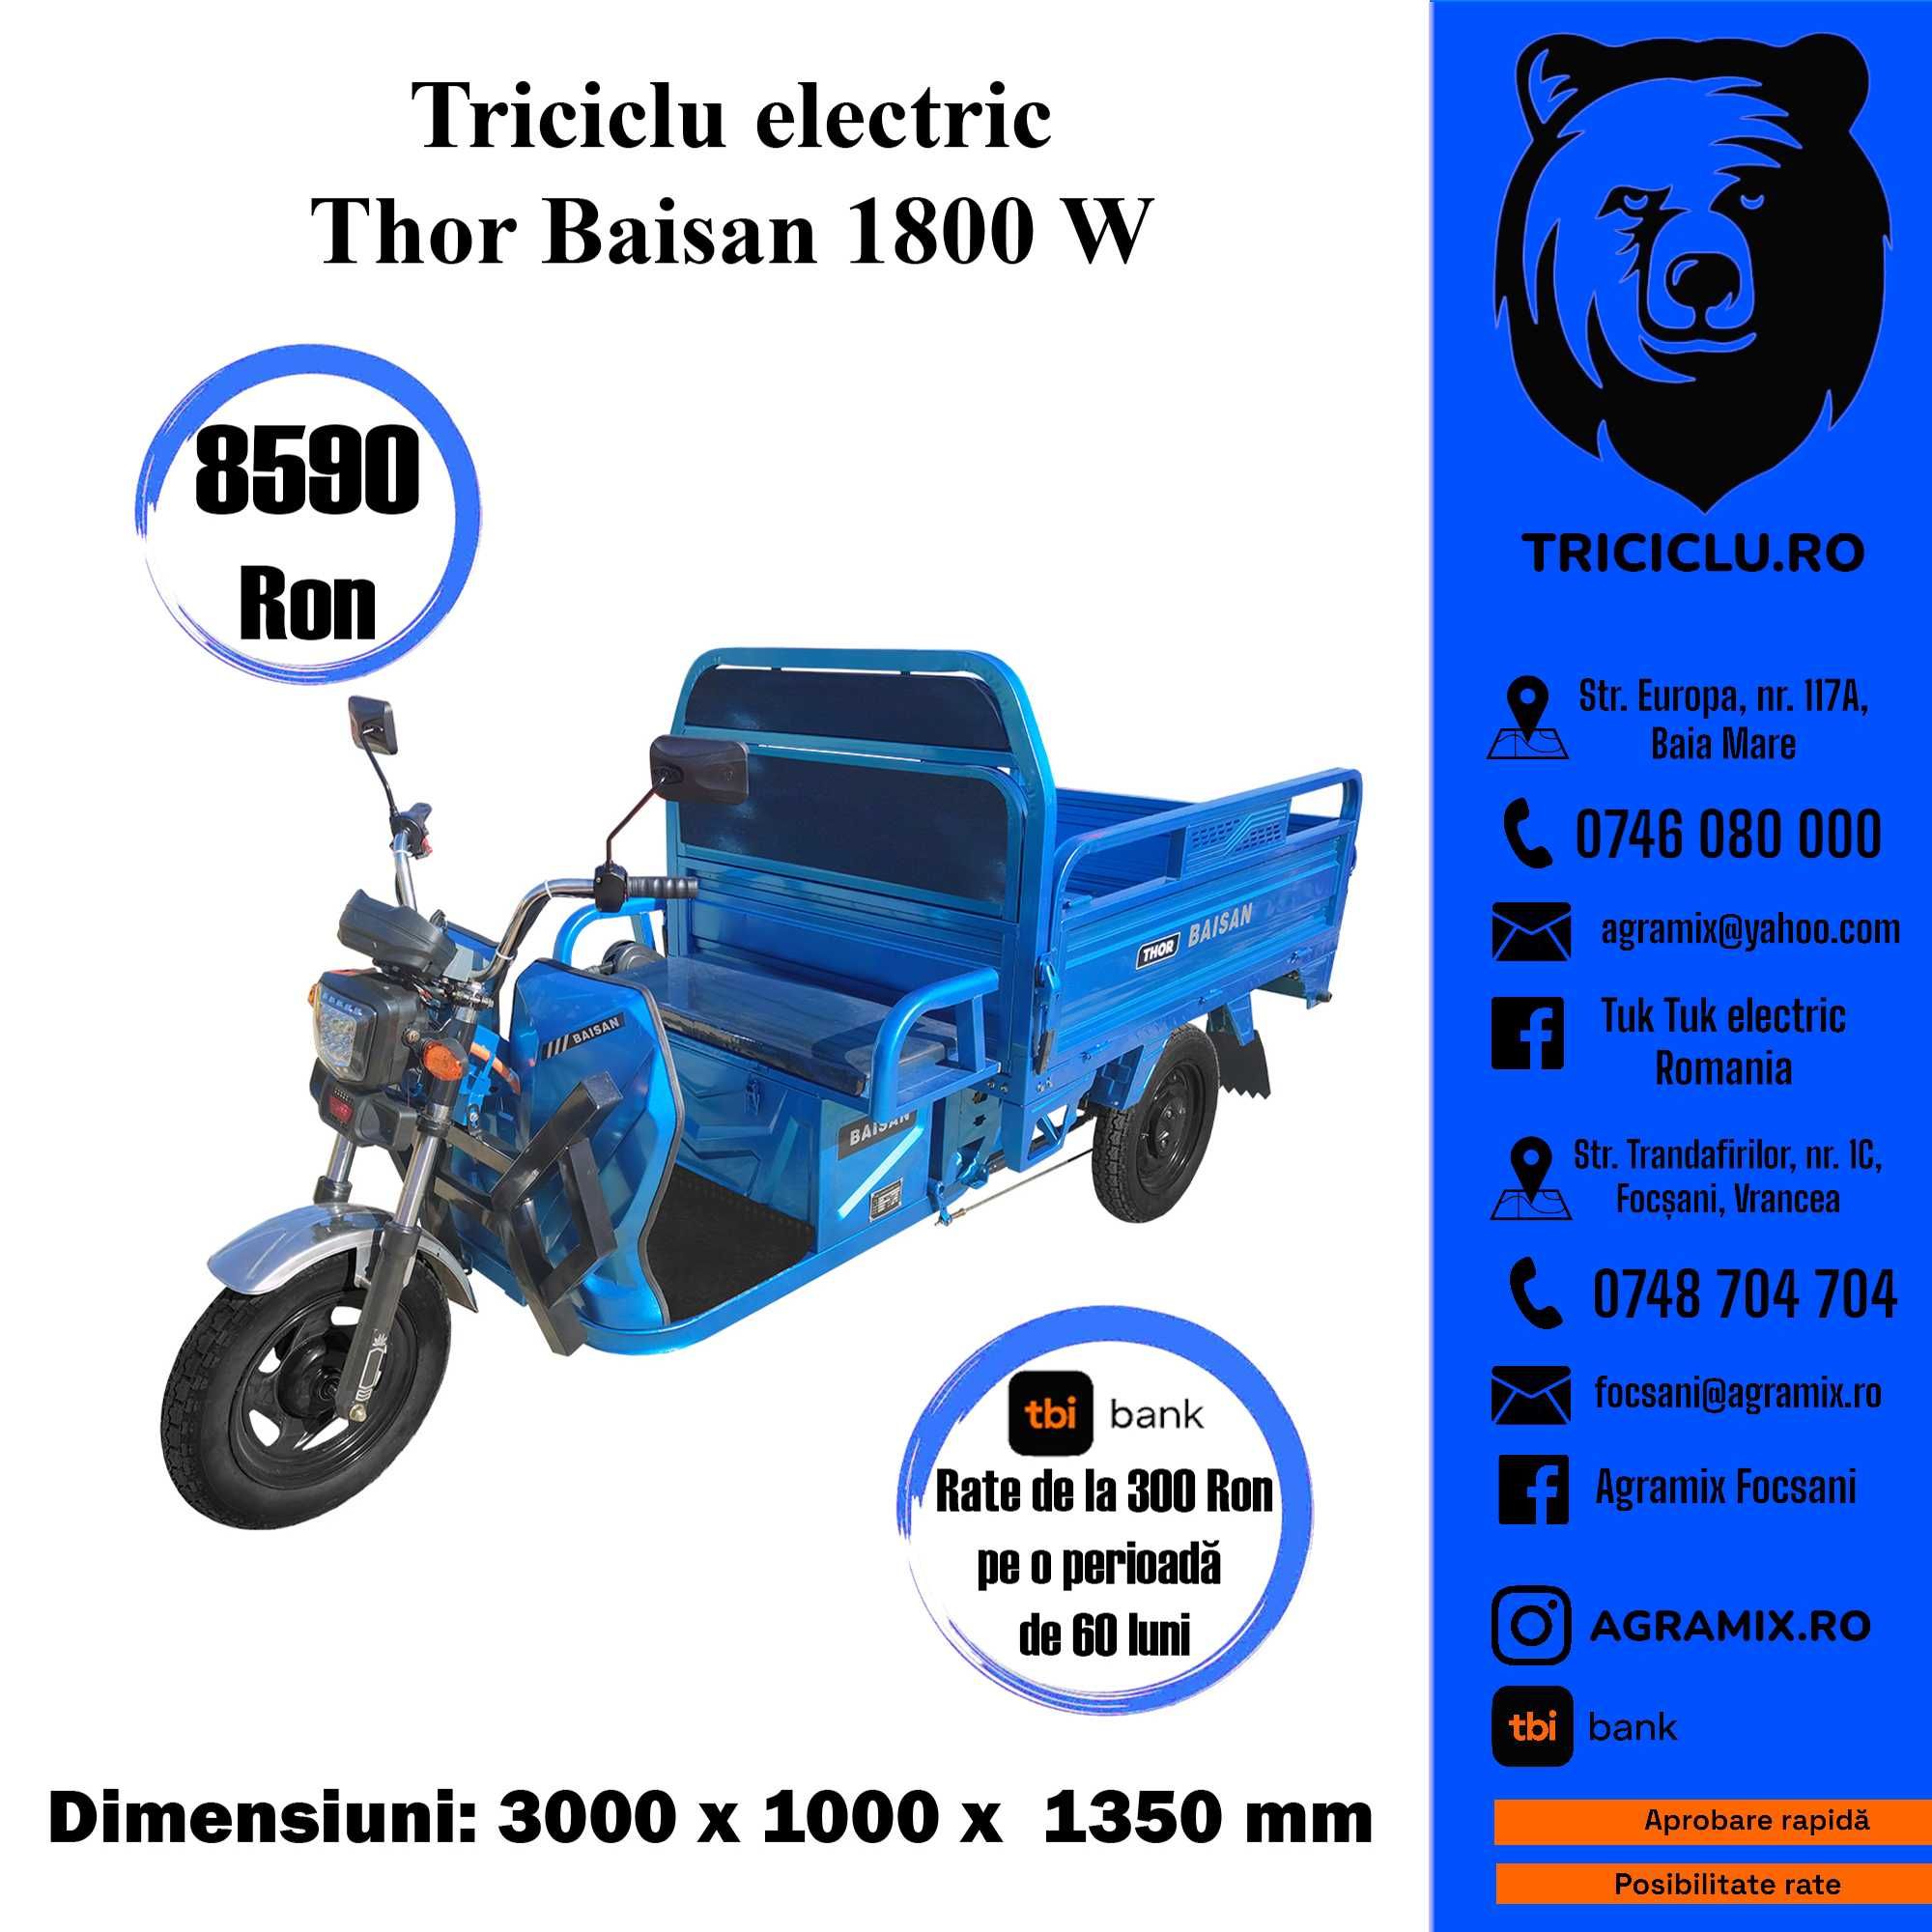 Triciclu electric Baisan Cargo-Plus tuk tuk nou 1800 w Agramix